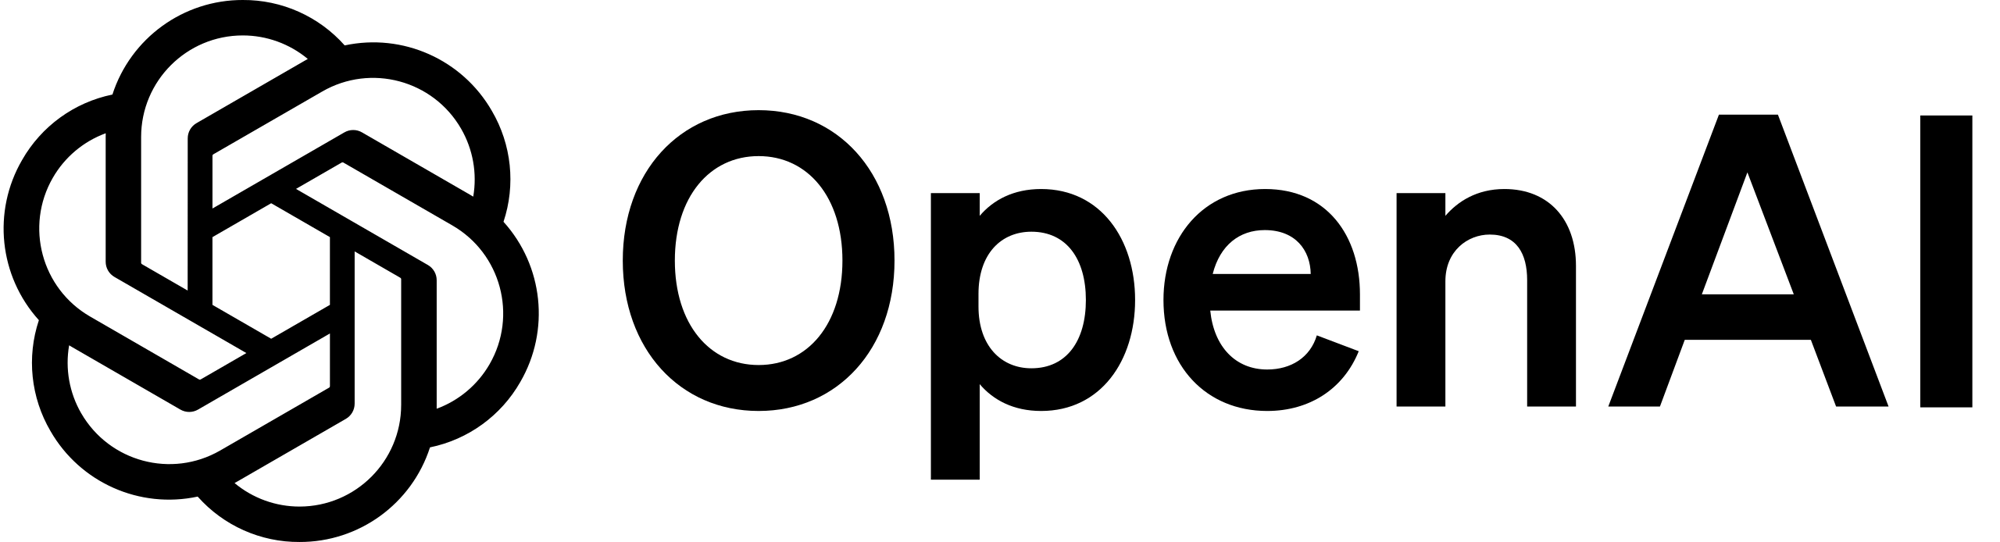 OpenAI_Logo.svg